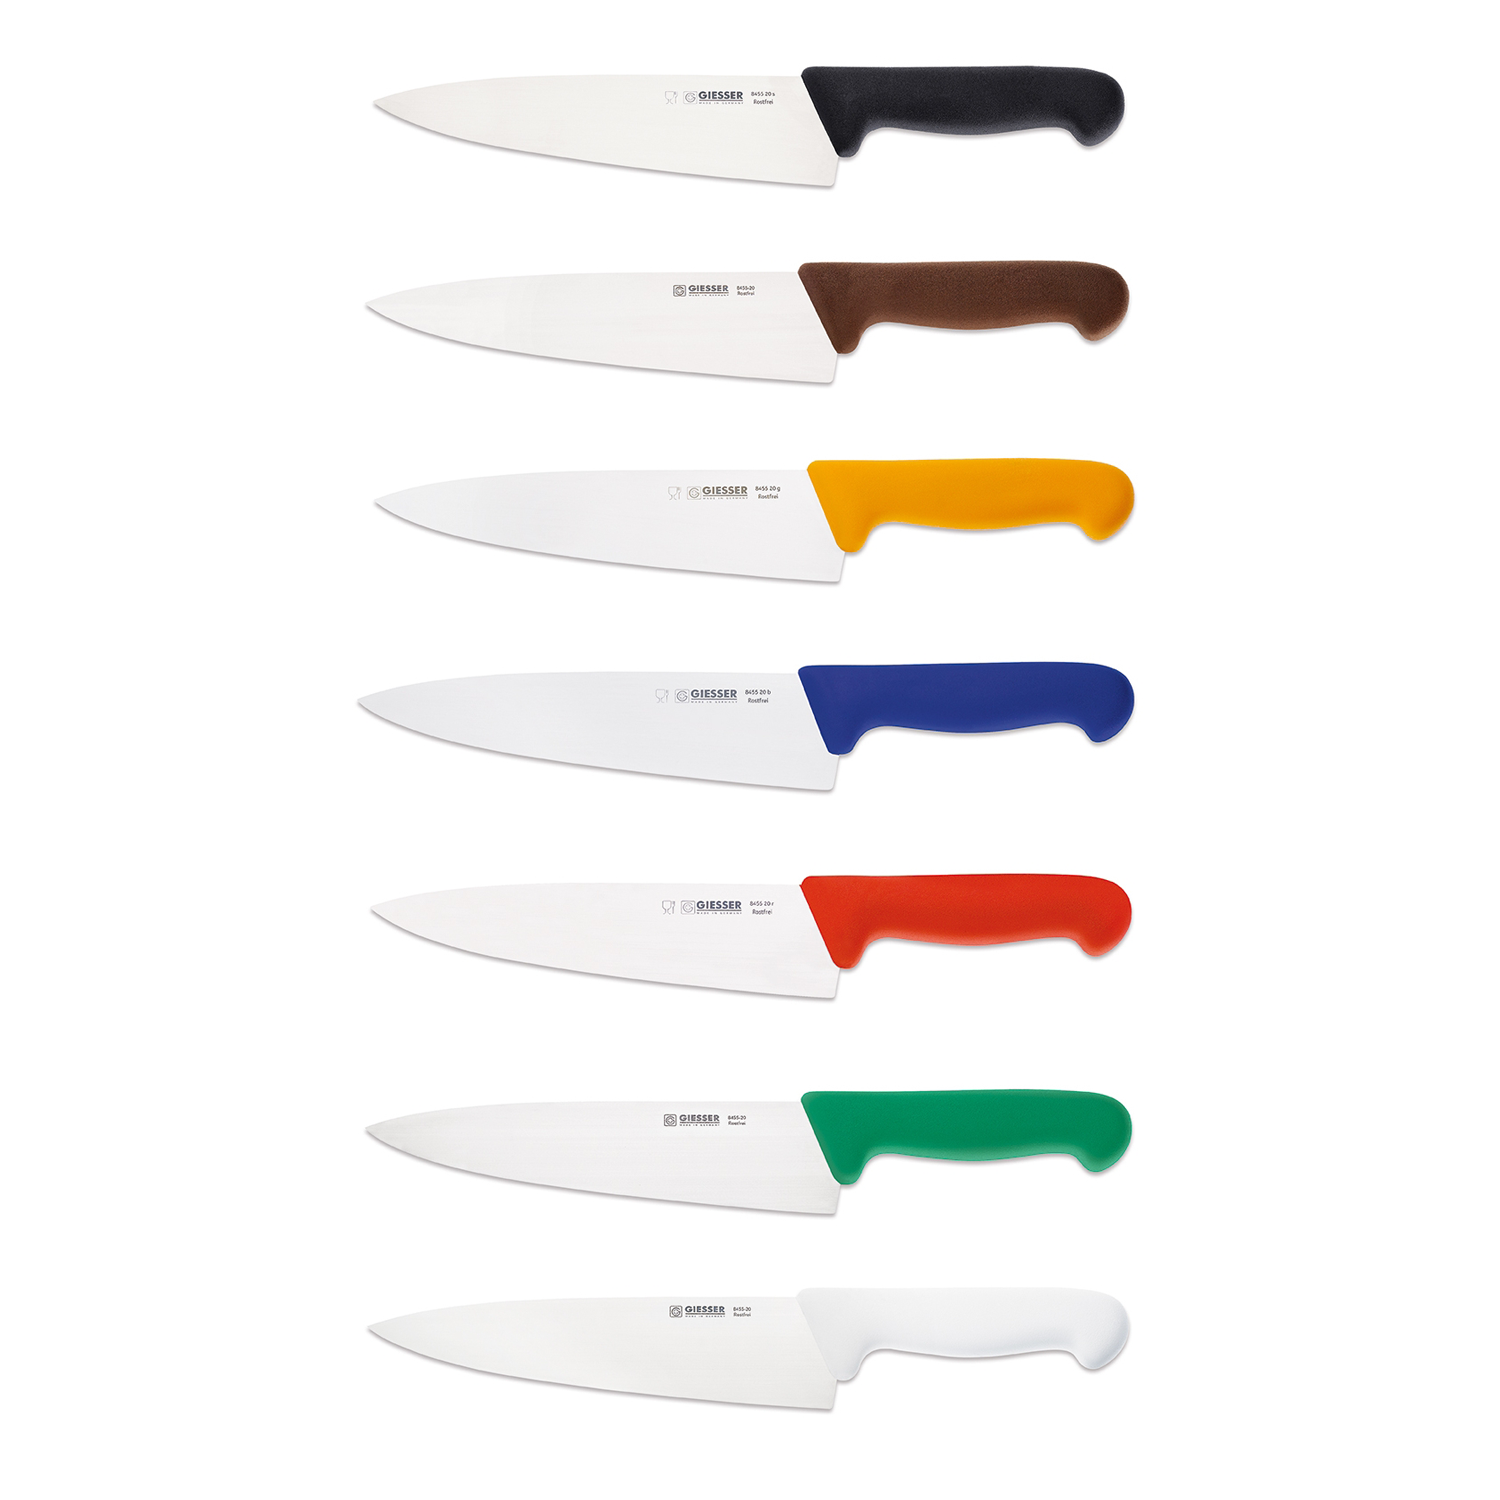 GIESSER Chef Knife Blade 20 cm. มีดGiesser มีดทำครัว มีดเชฟ มีดหั่น ความยาวใบมีด 20 ซม. มีด 8 นิ้ว [GGM™]